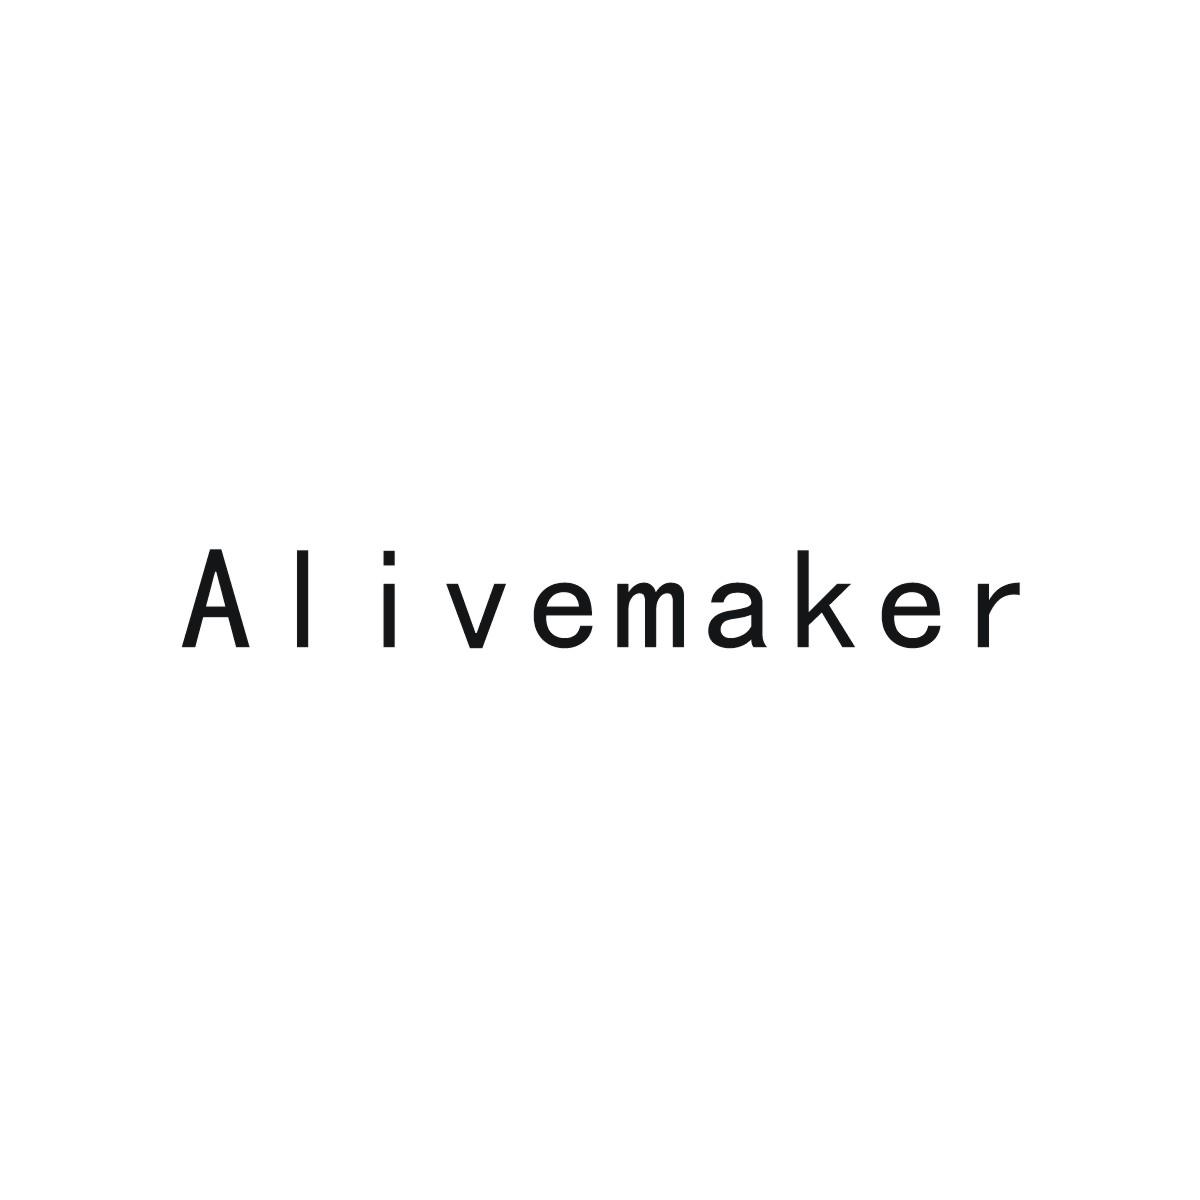 Alivemaker喷灯商标转让费用买卖交易流程